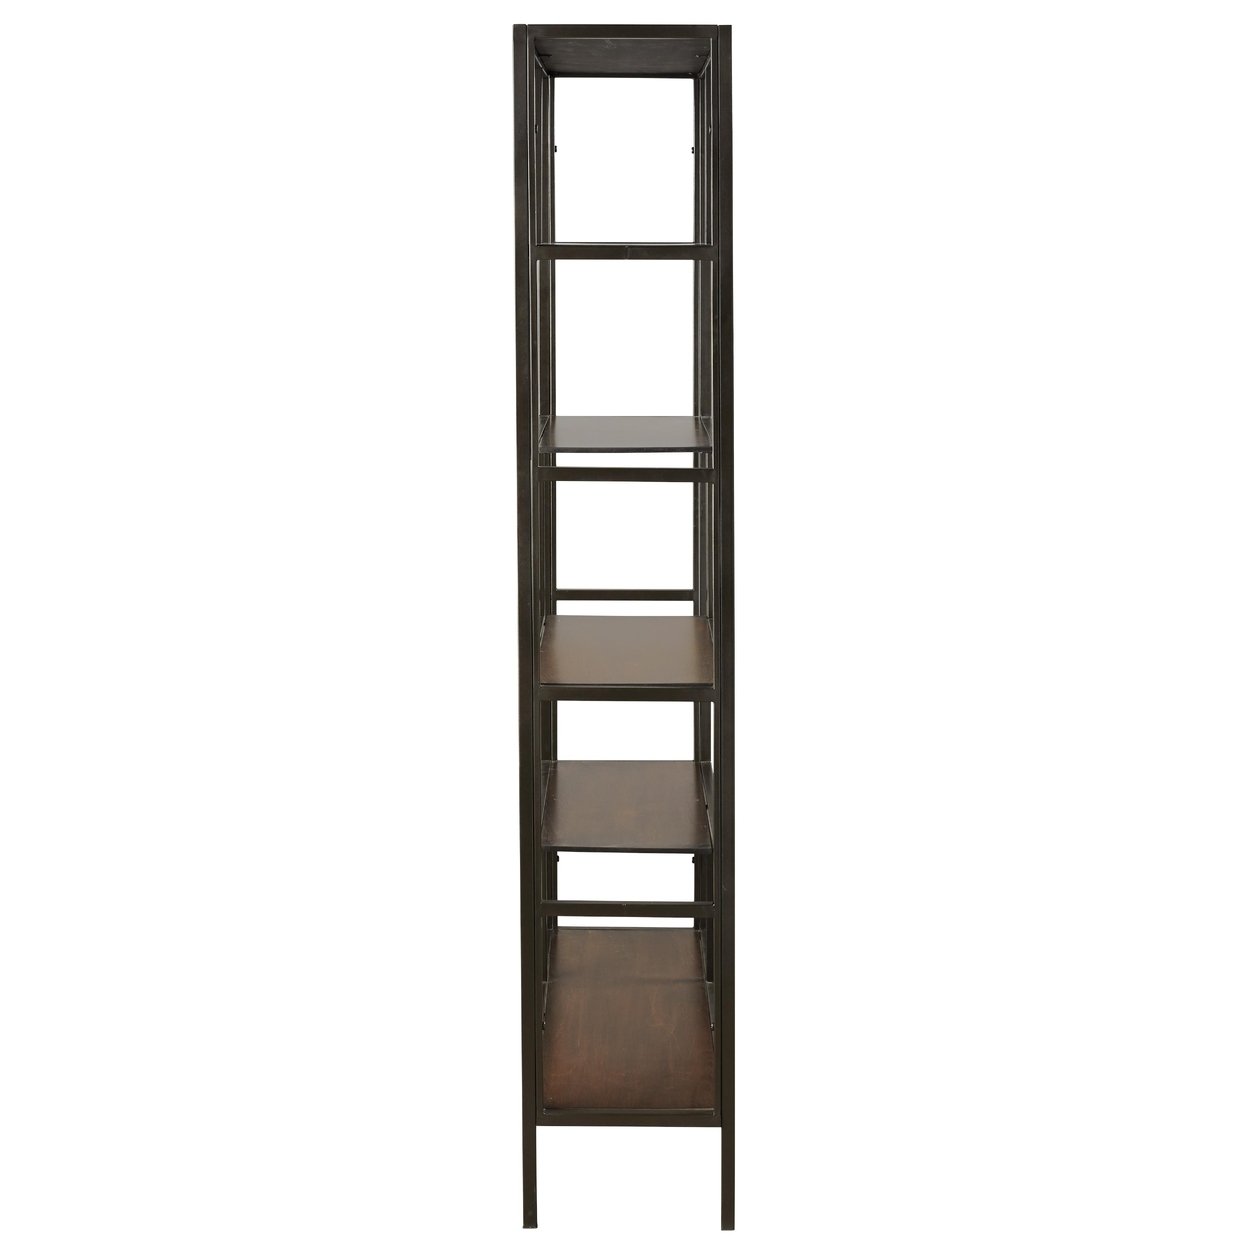 5 Shelves Asymmetric Design Bookcase With Metal Frame, Brown And Black- Saltoro Sherpi